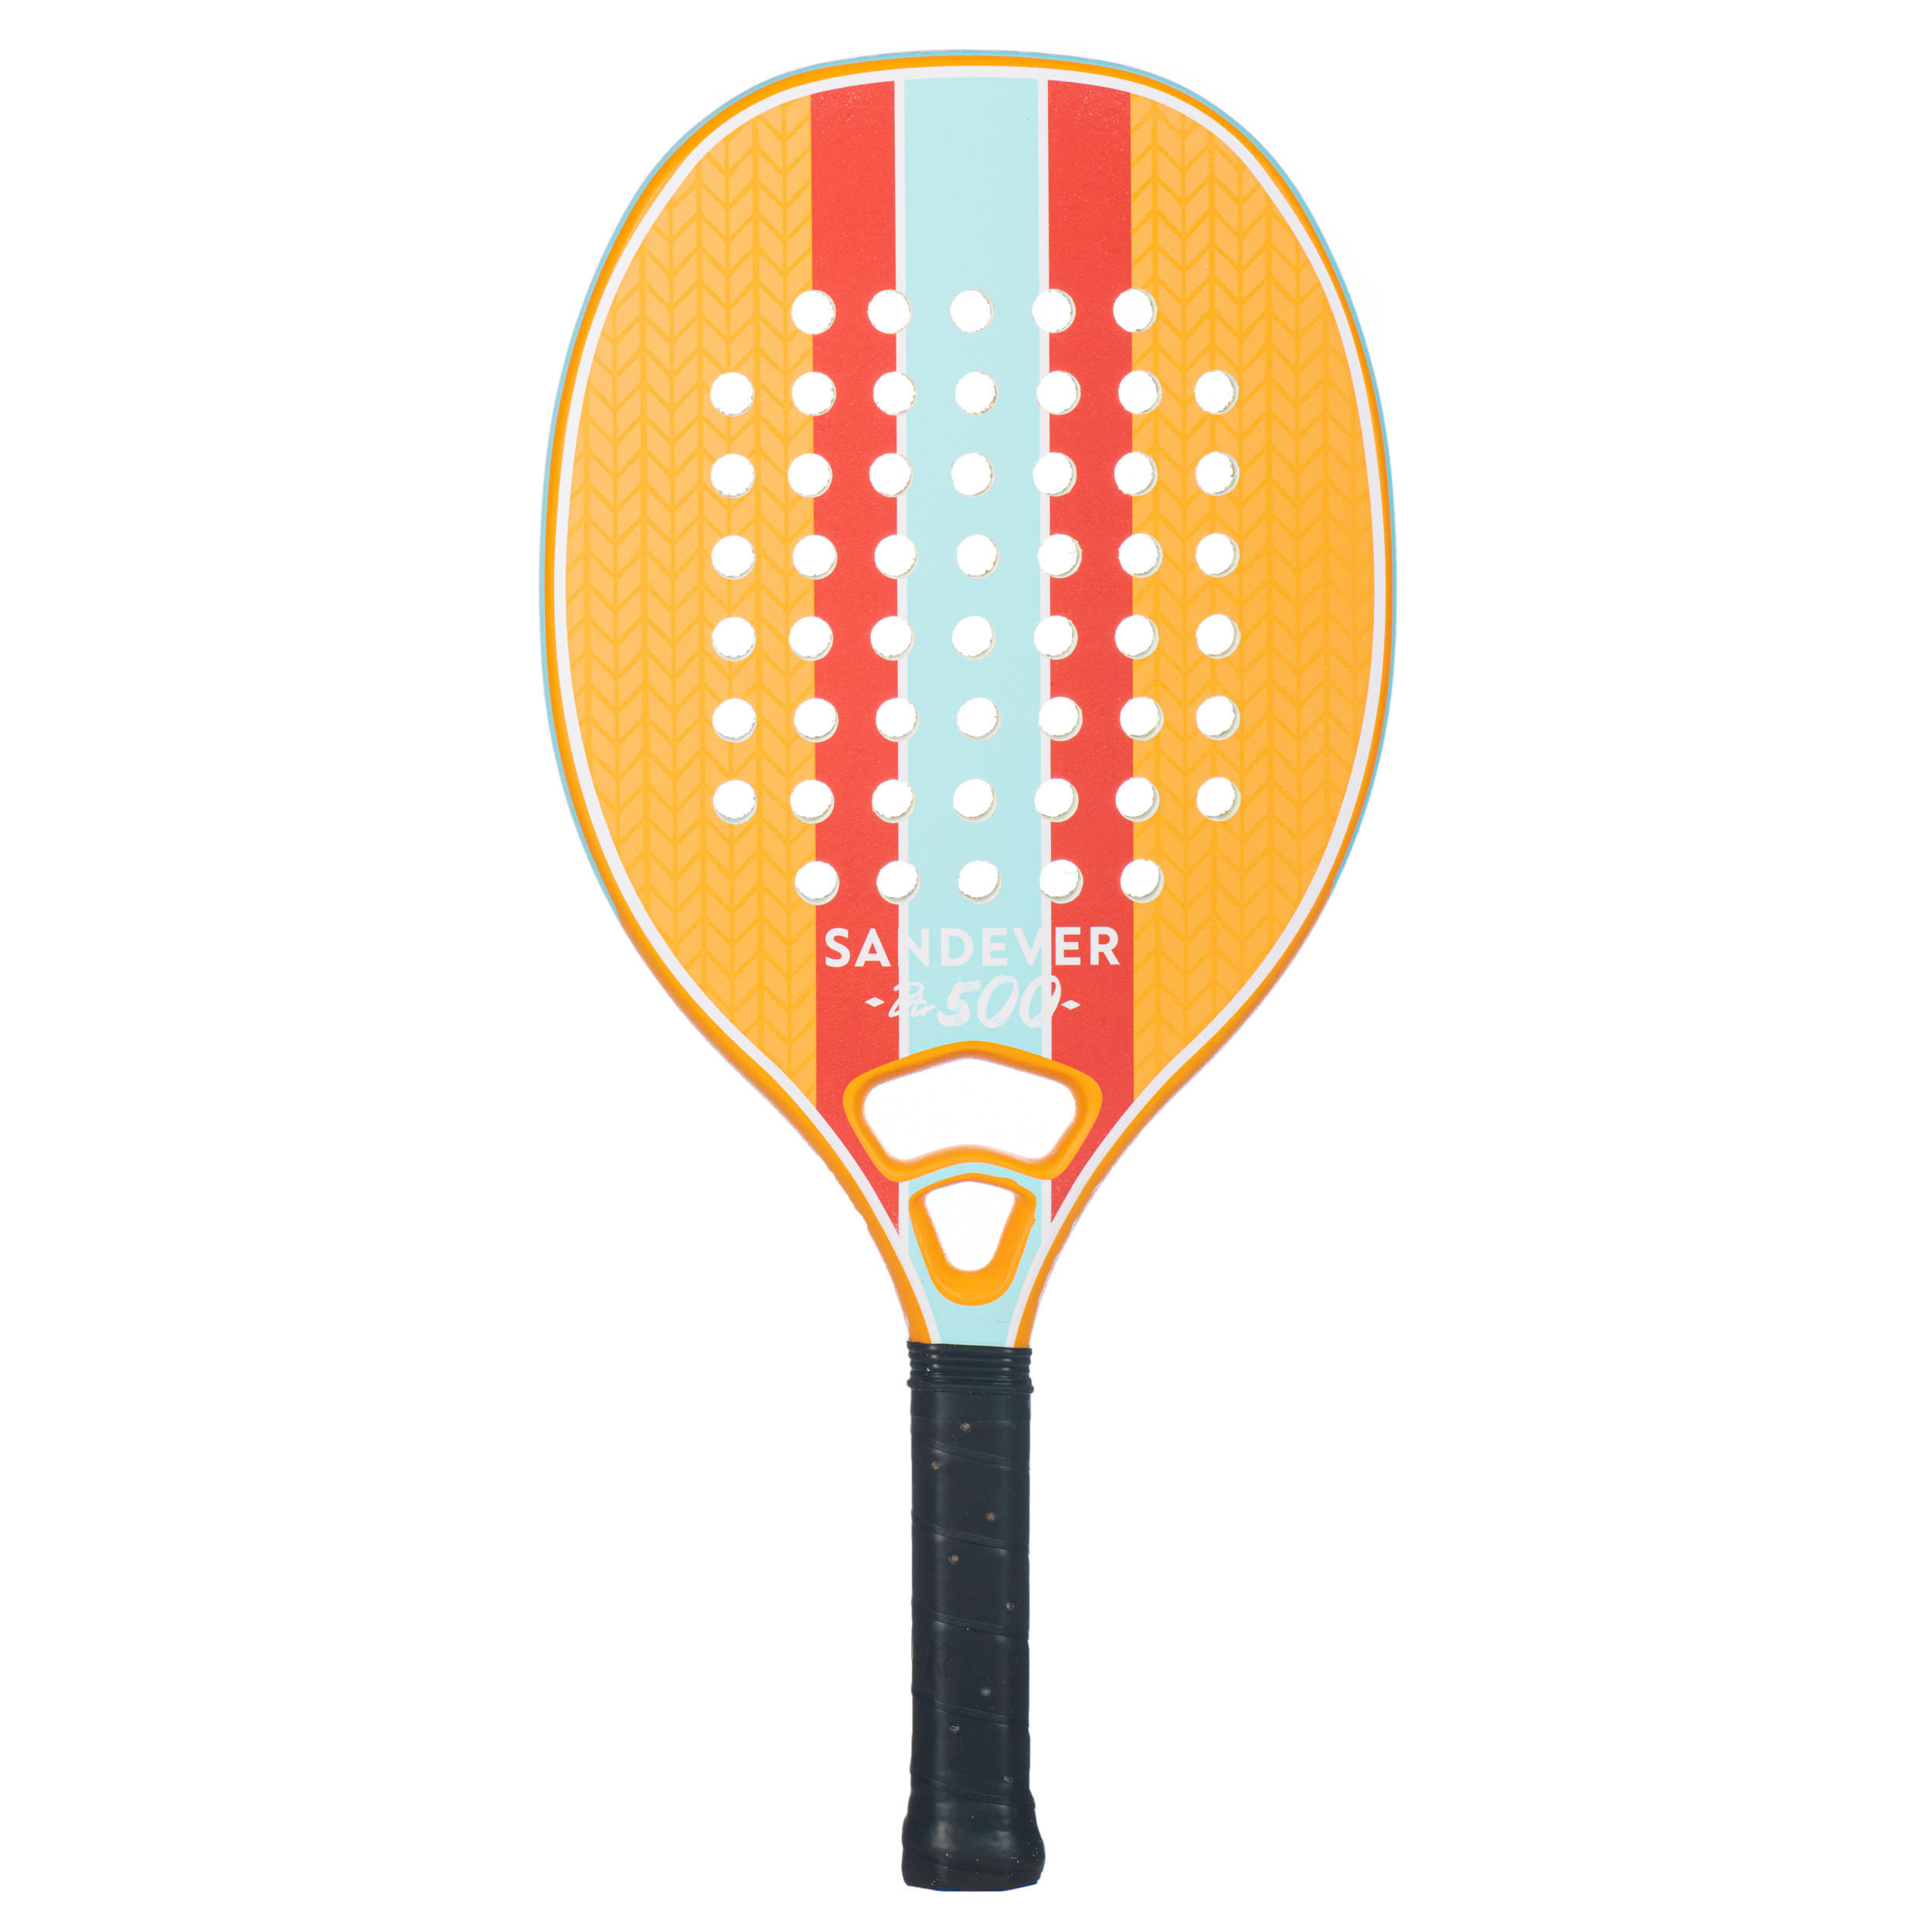 SANDEVER Beach Tennis Racket BTR 500 O